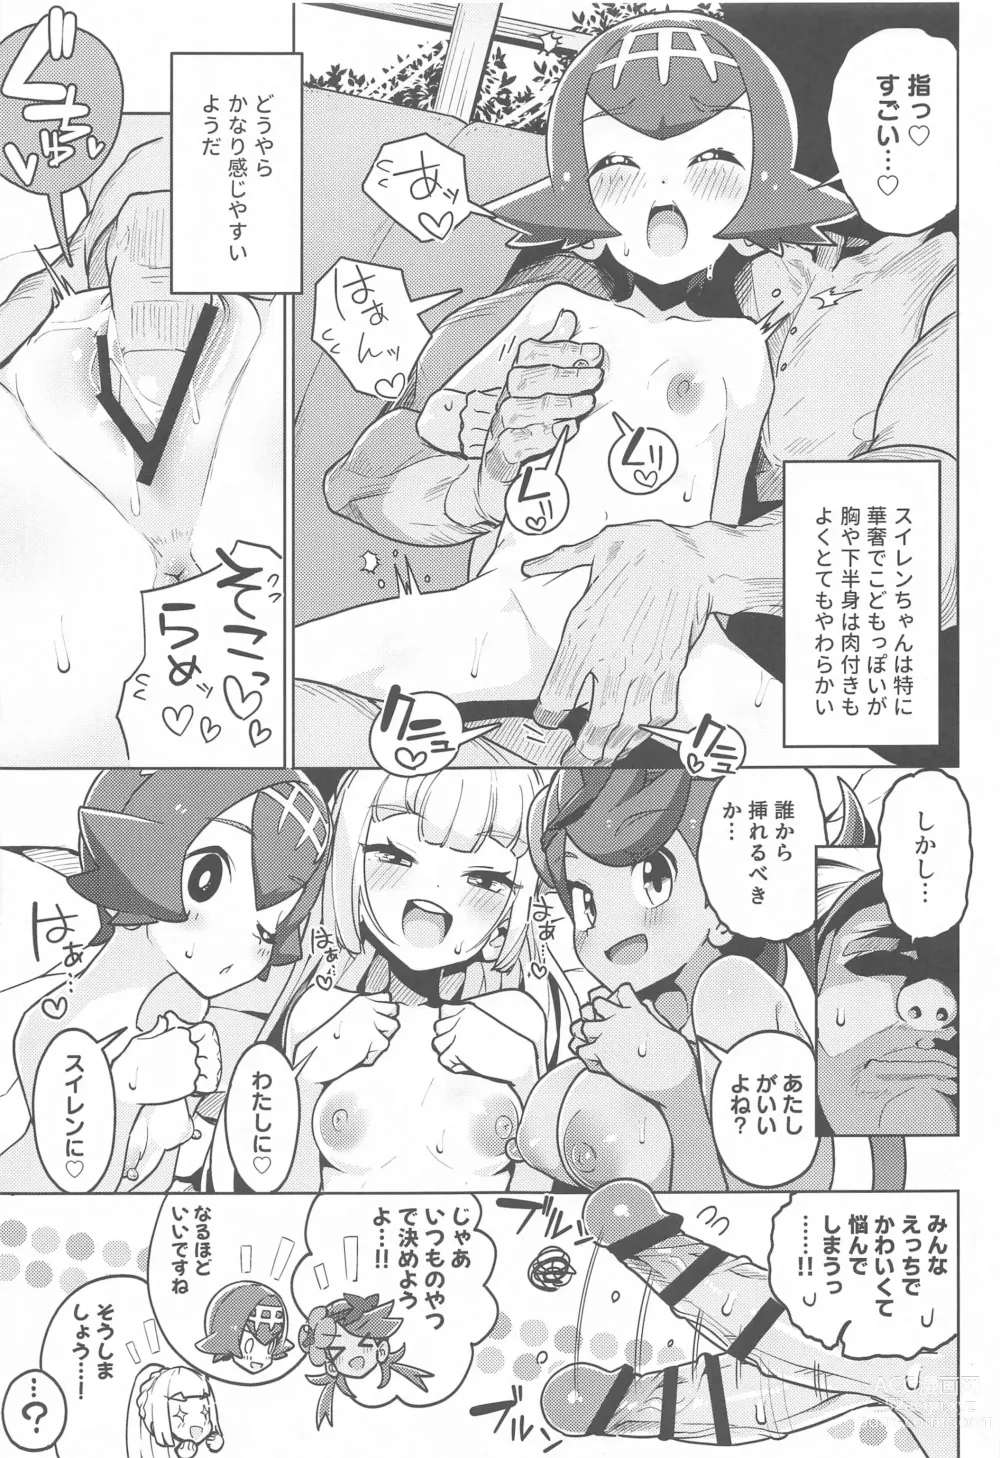 Page 10 of doujinshi POCKET BITCH 2